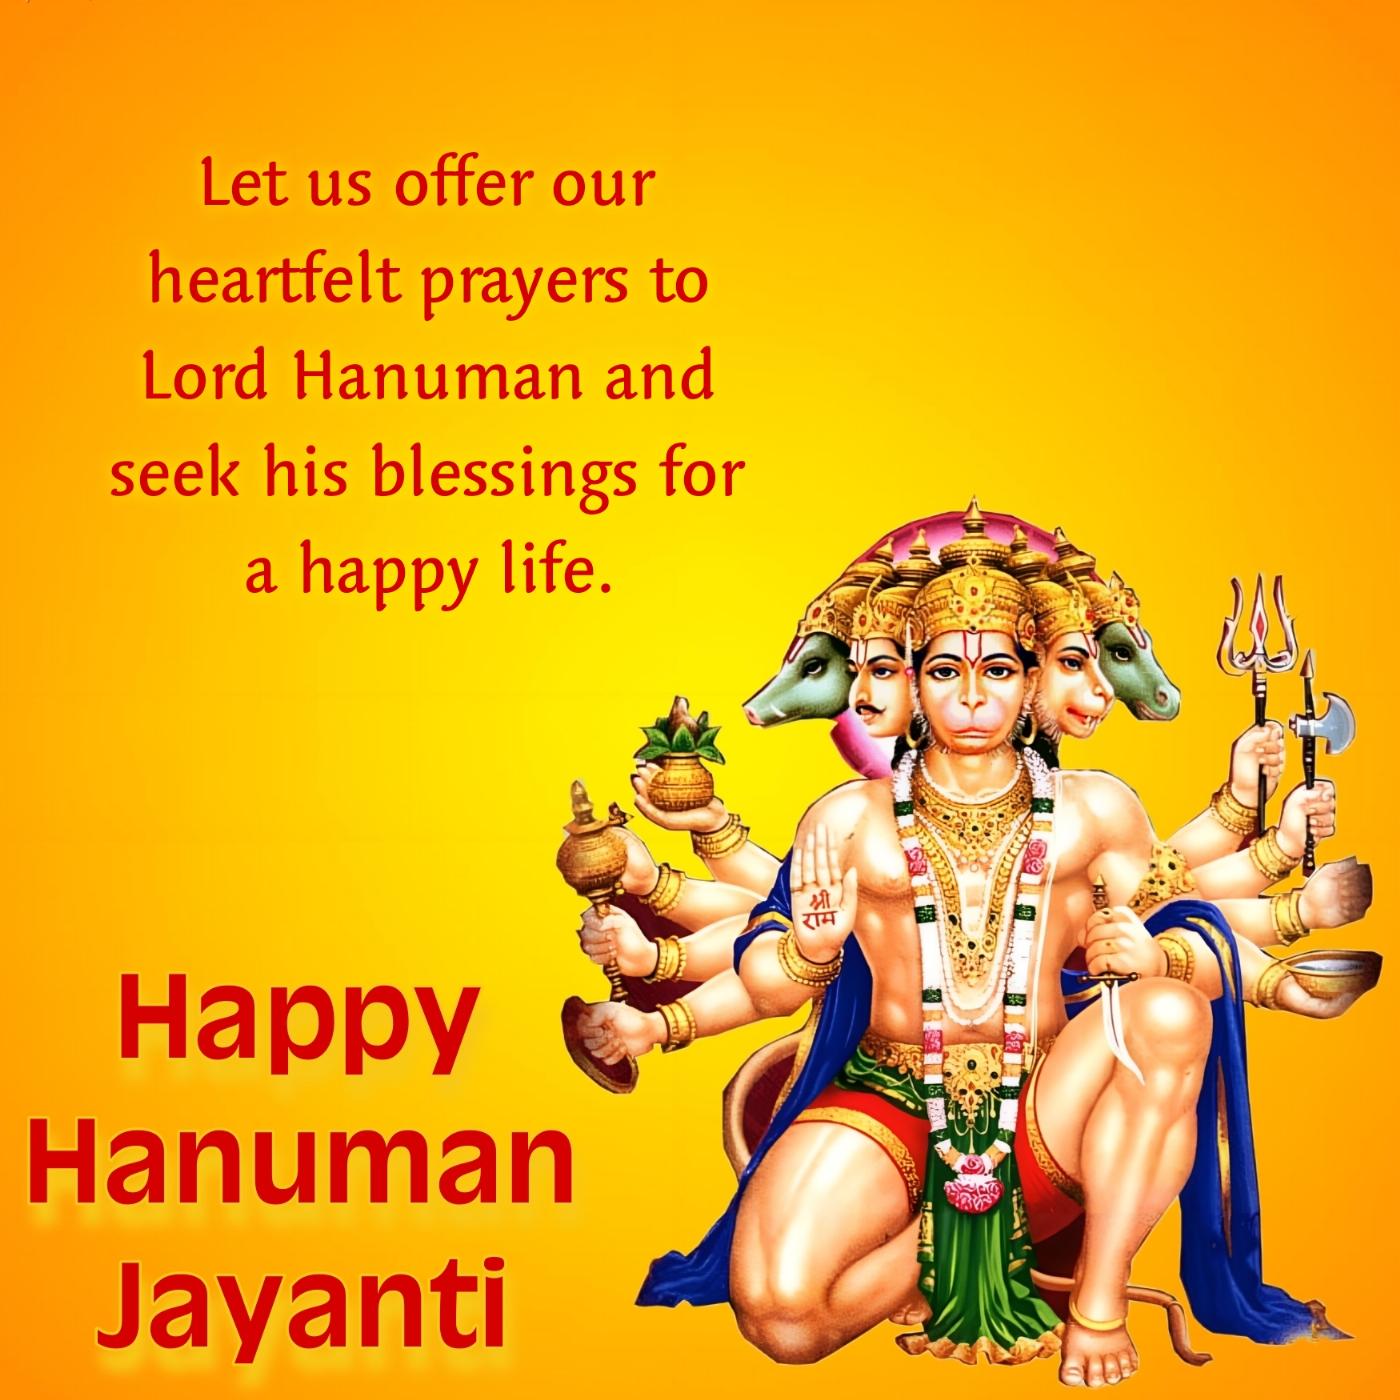 Let us offer our heartfelt prayers to Lord Hanuman